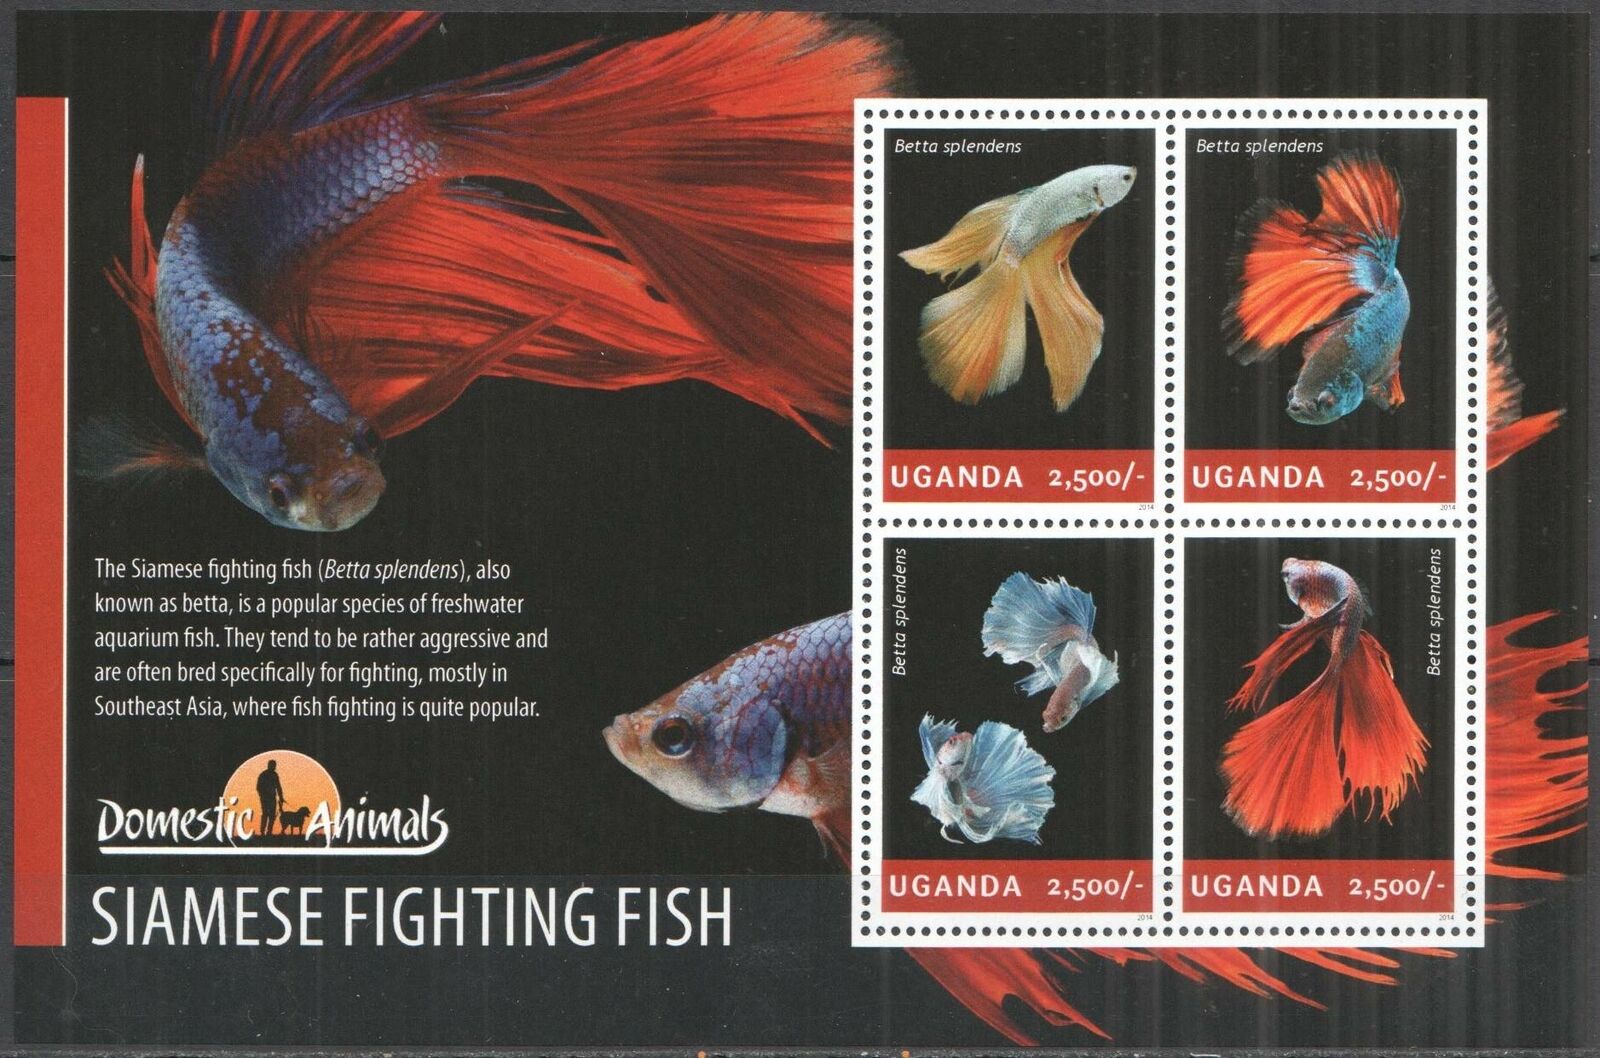 Ug012 2014 Uganda Siamese Fighting Fish Fauna Domestic Animals #3275-3278 Mnh